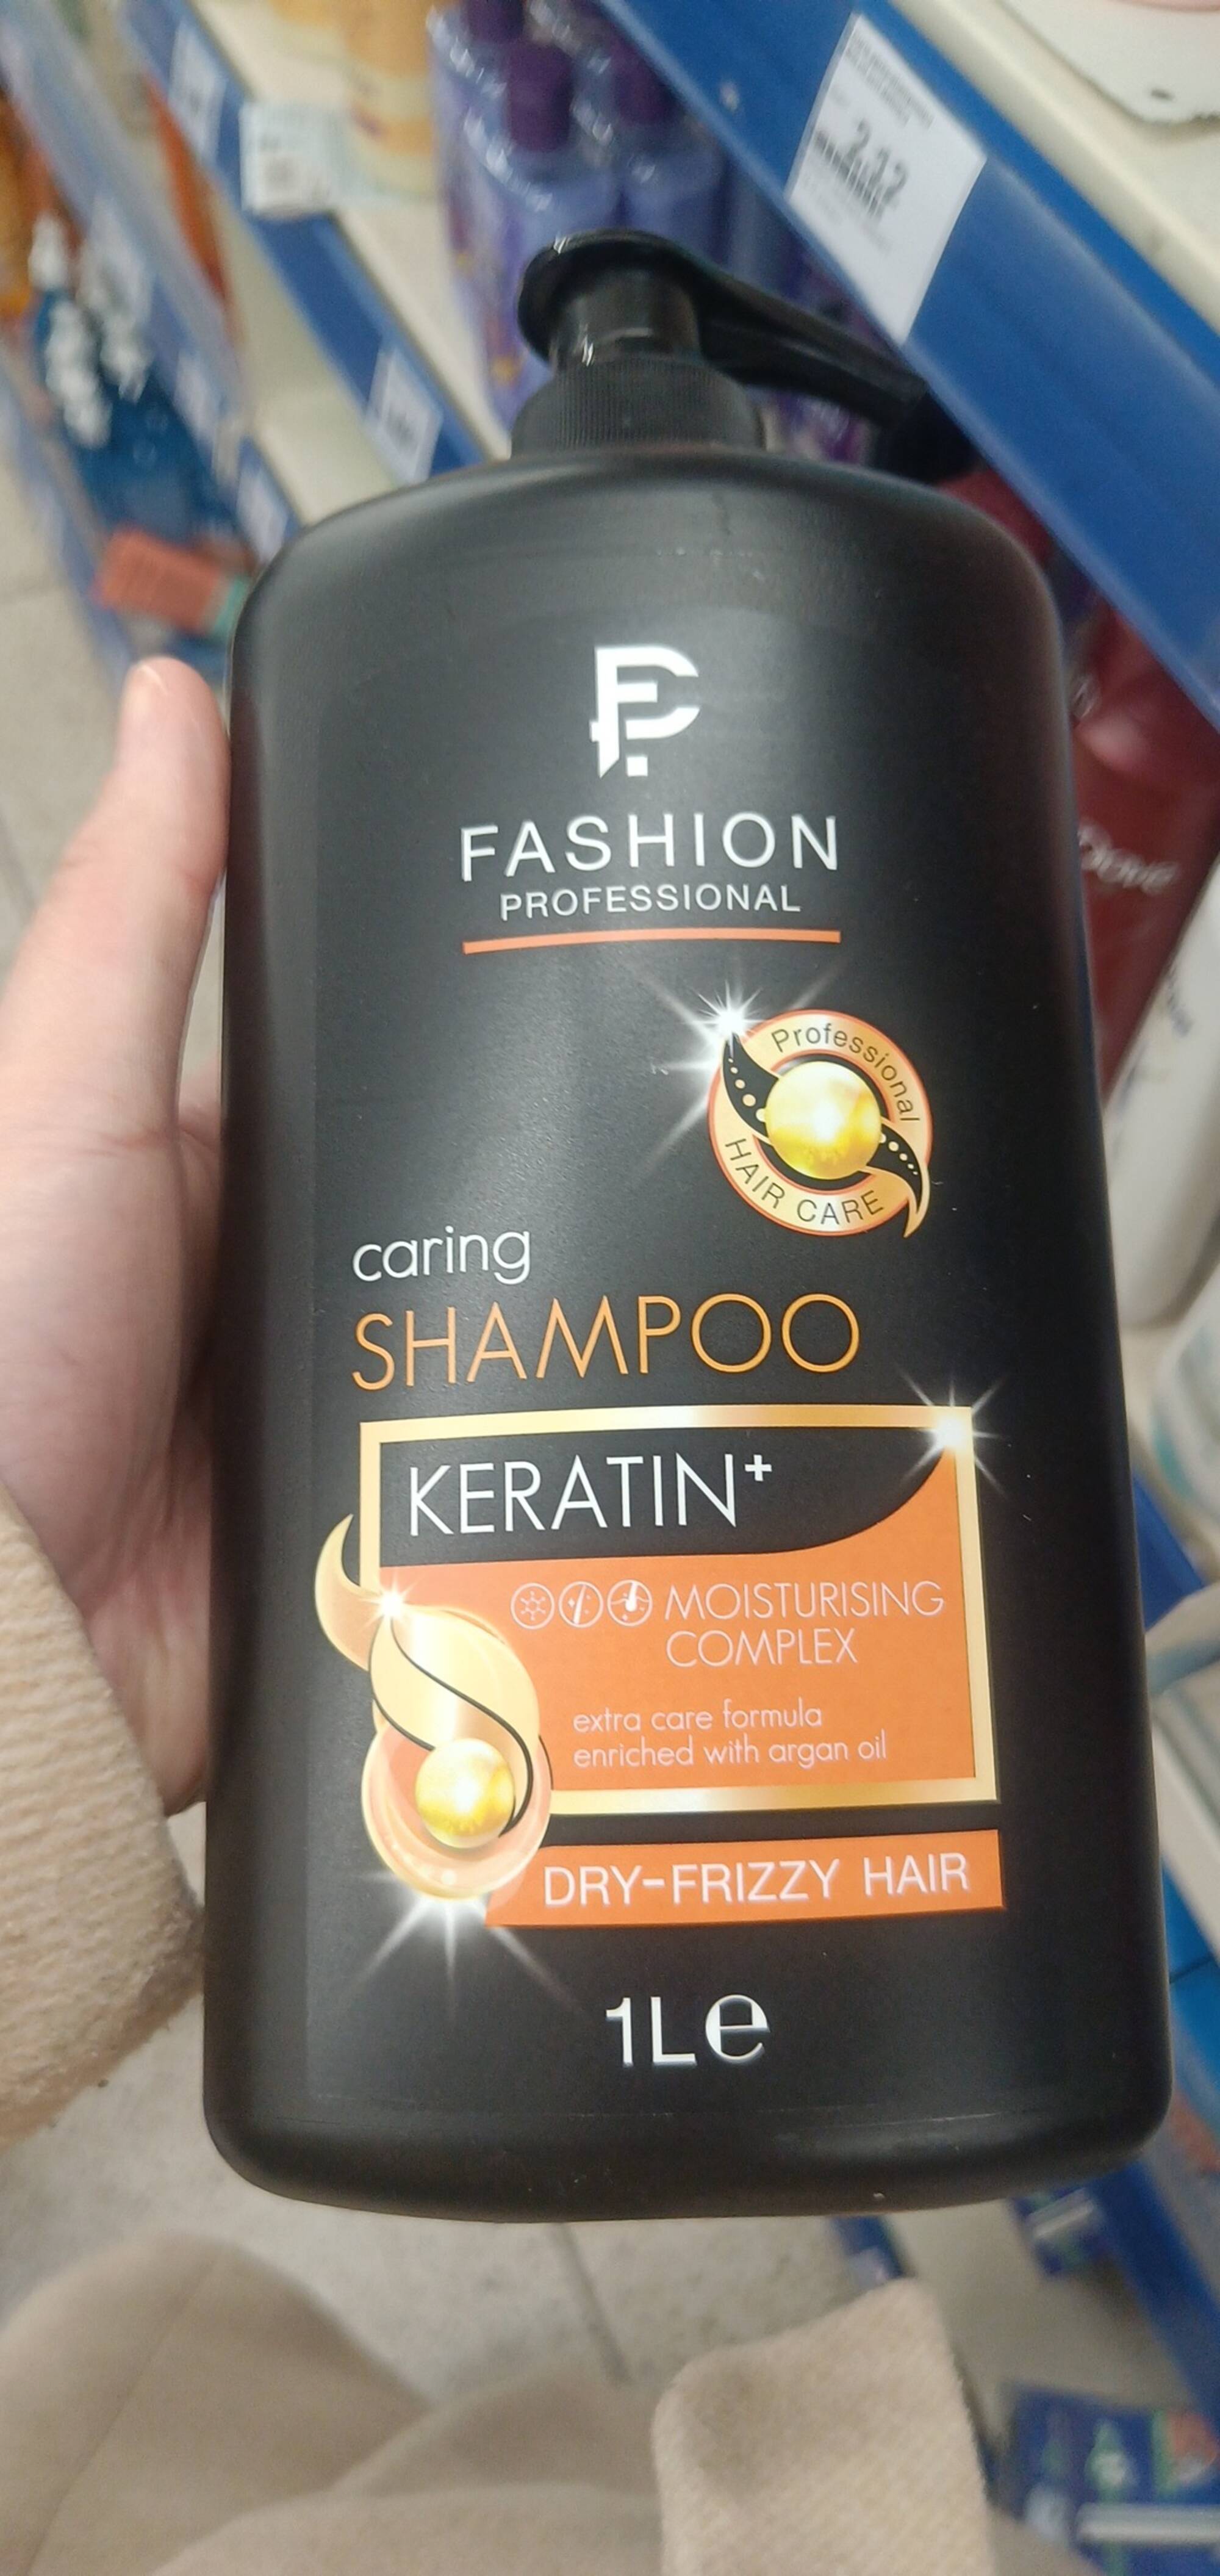 FASHION PROFESSIONAL - Keratin - Caring shampoo